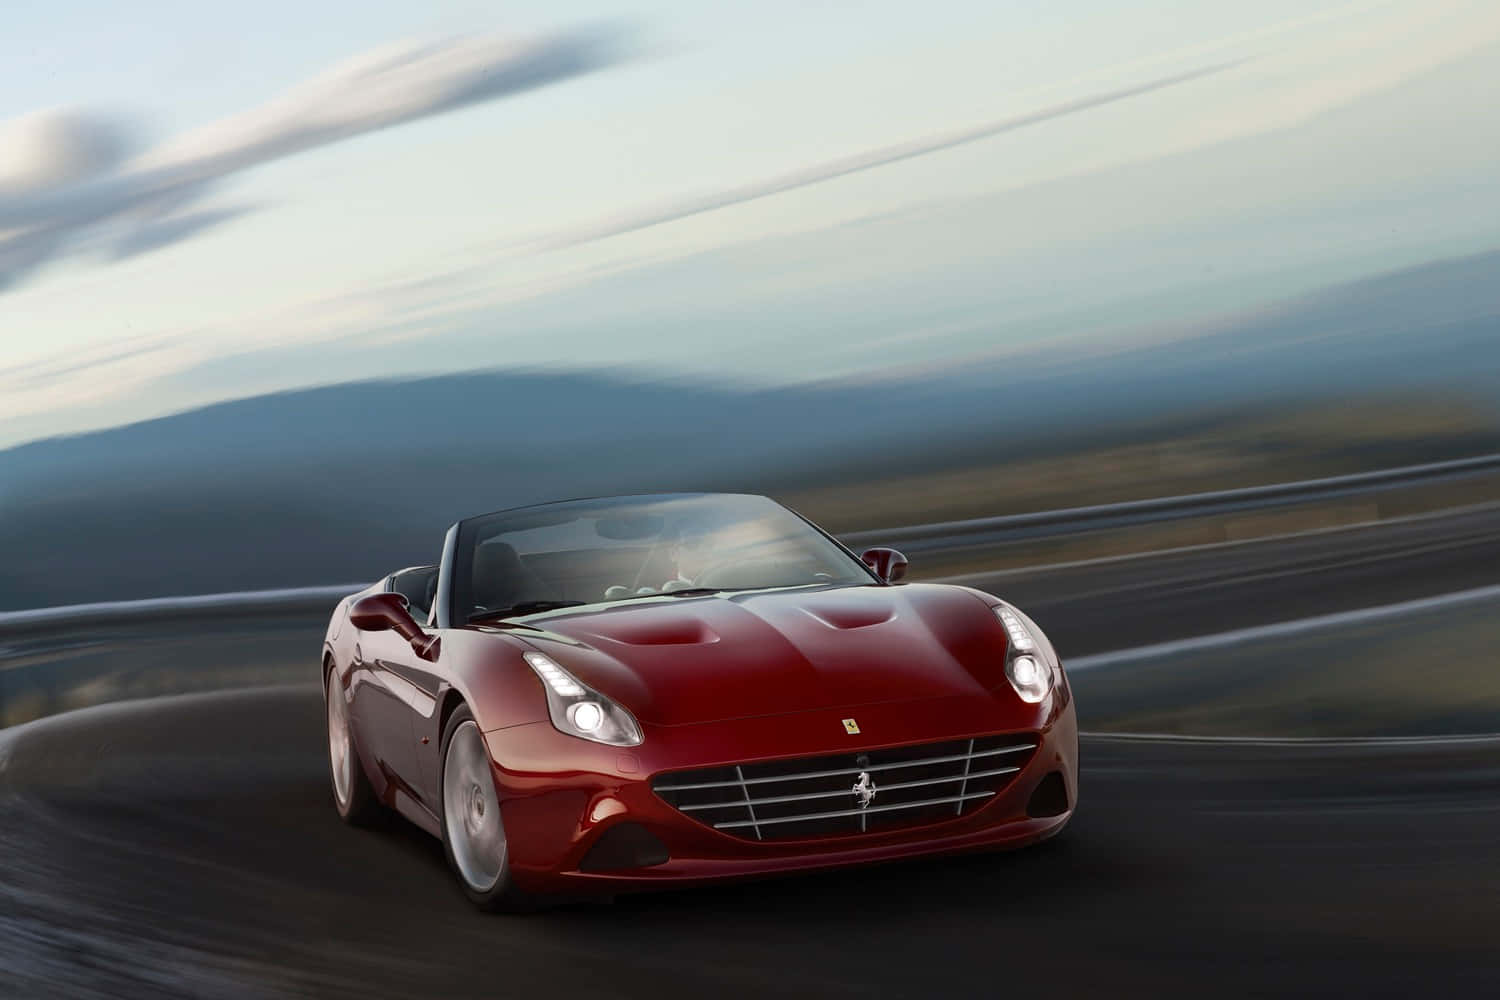 Stunning Red Ferrari California T Cruising On Open Road Wallpaper